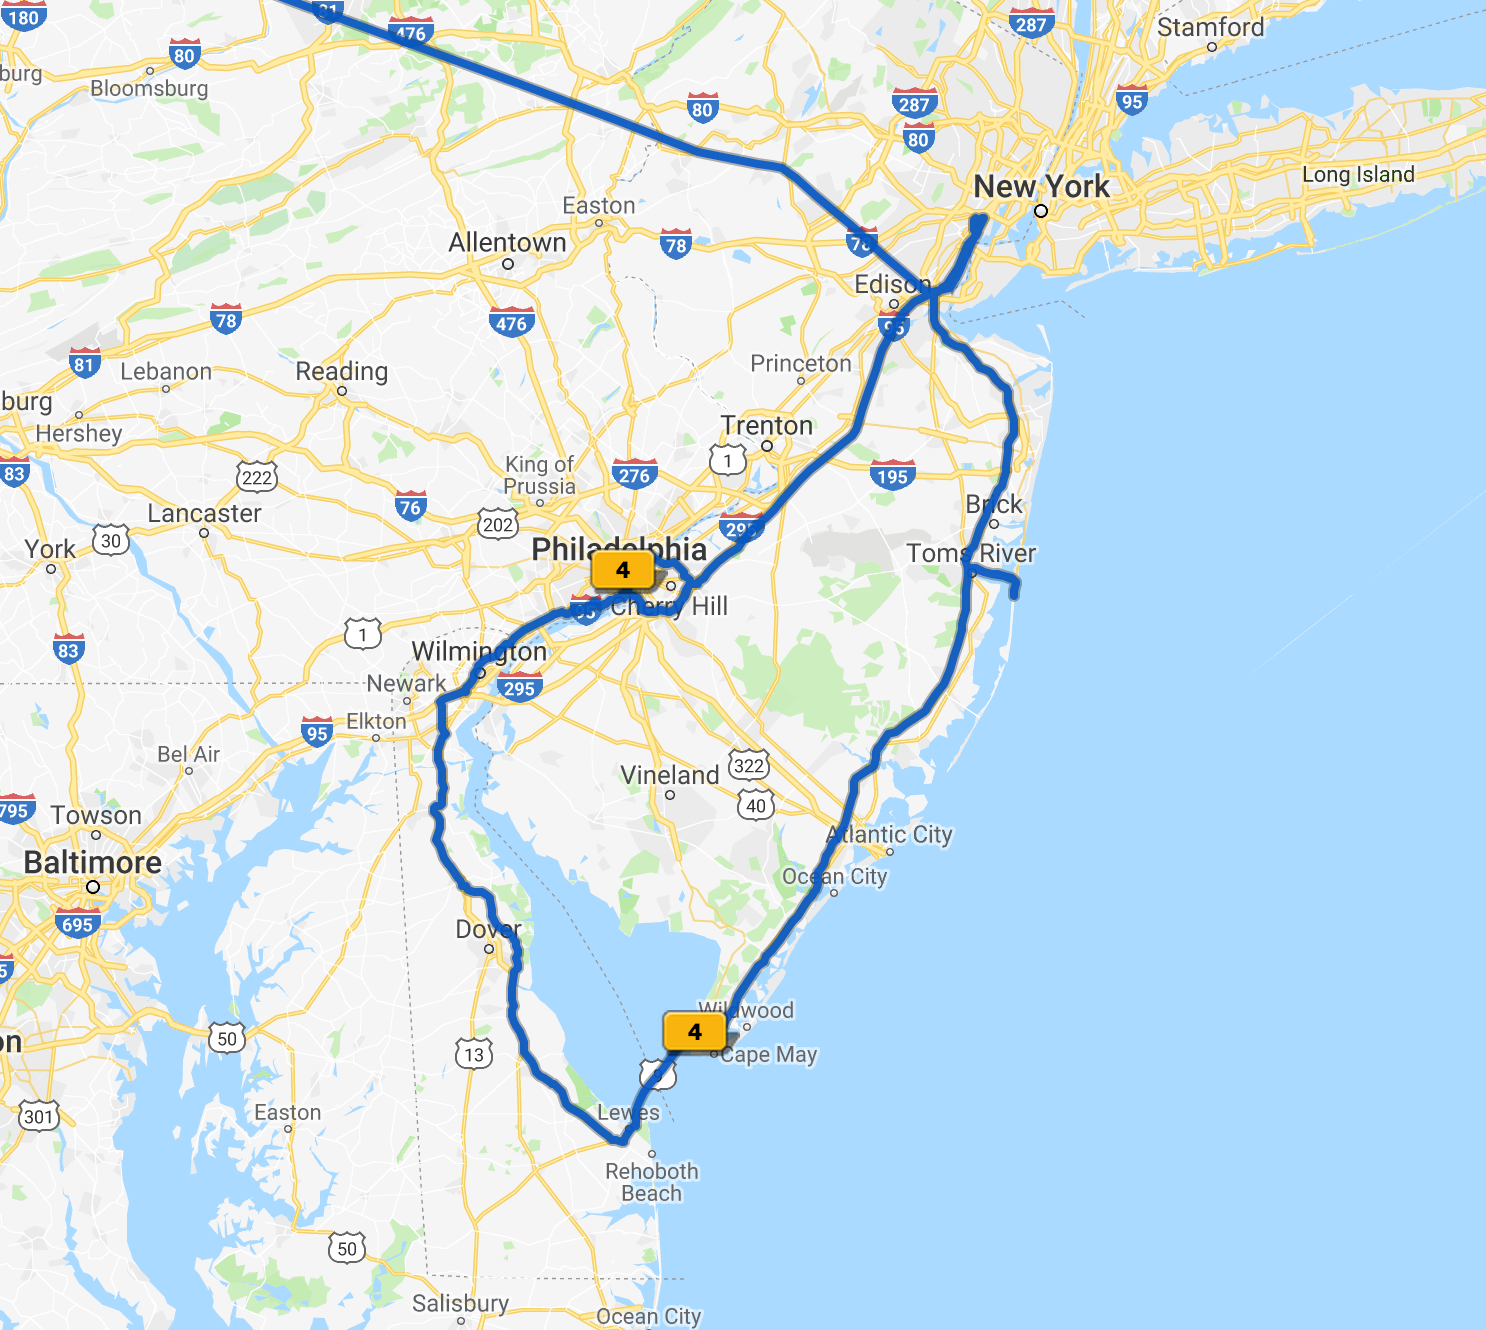 New Jersey / Philadelphia detail.